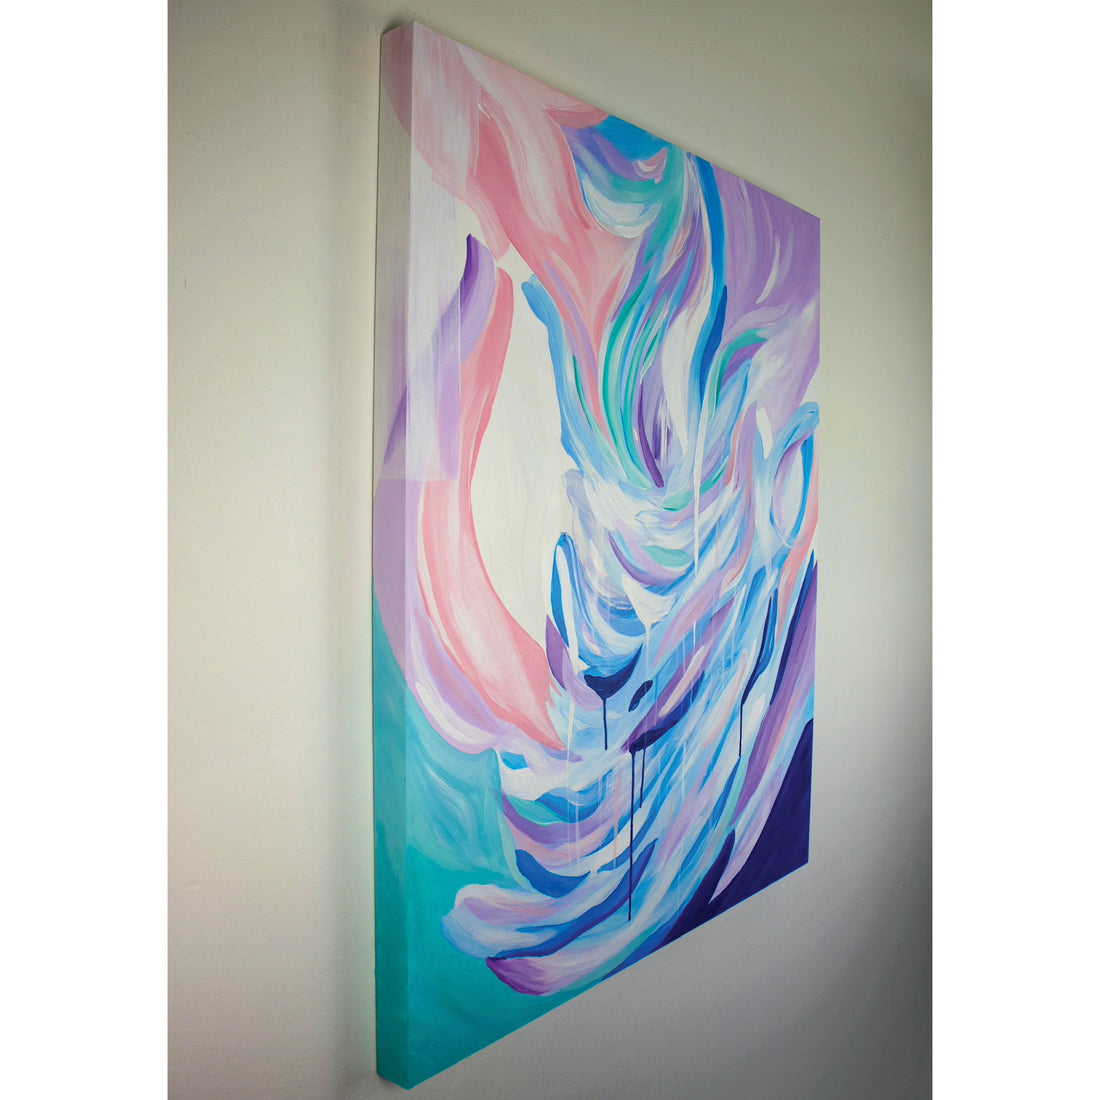 Amanda Wand "Radical Acceptance" abstract painting Canadian art